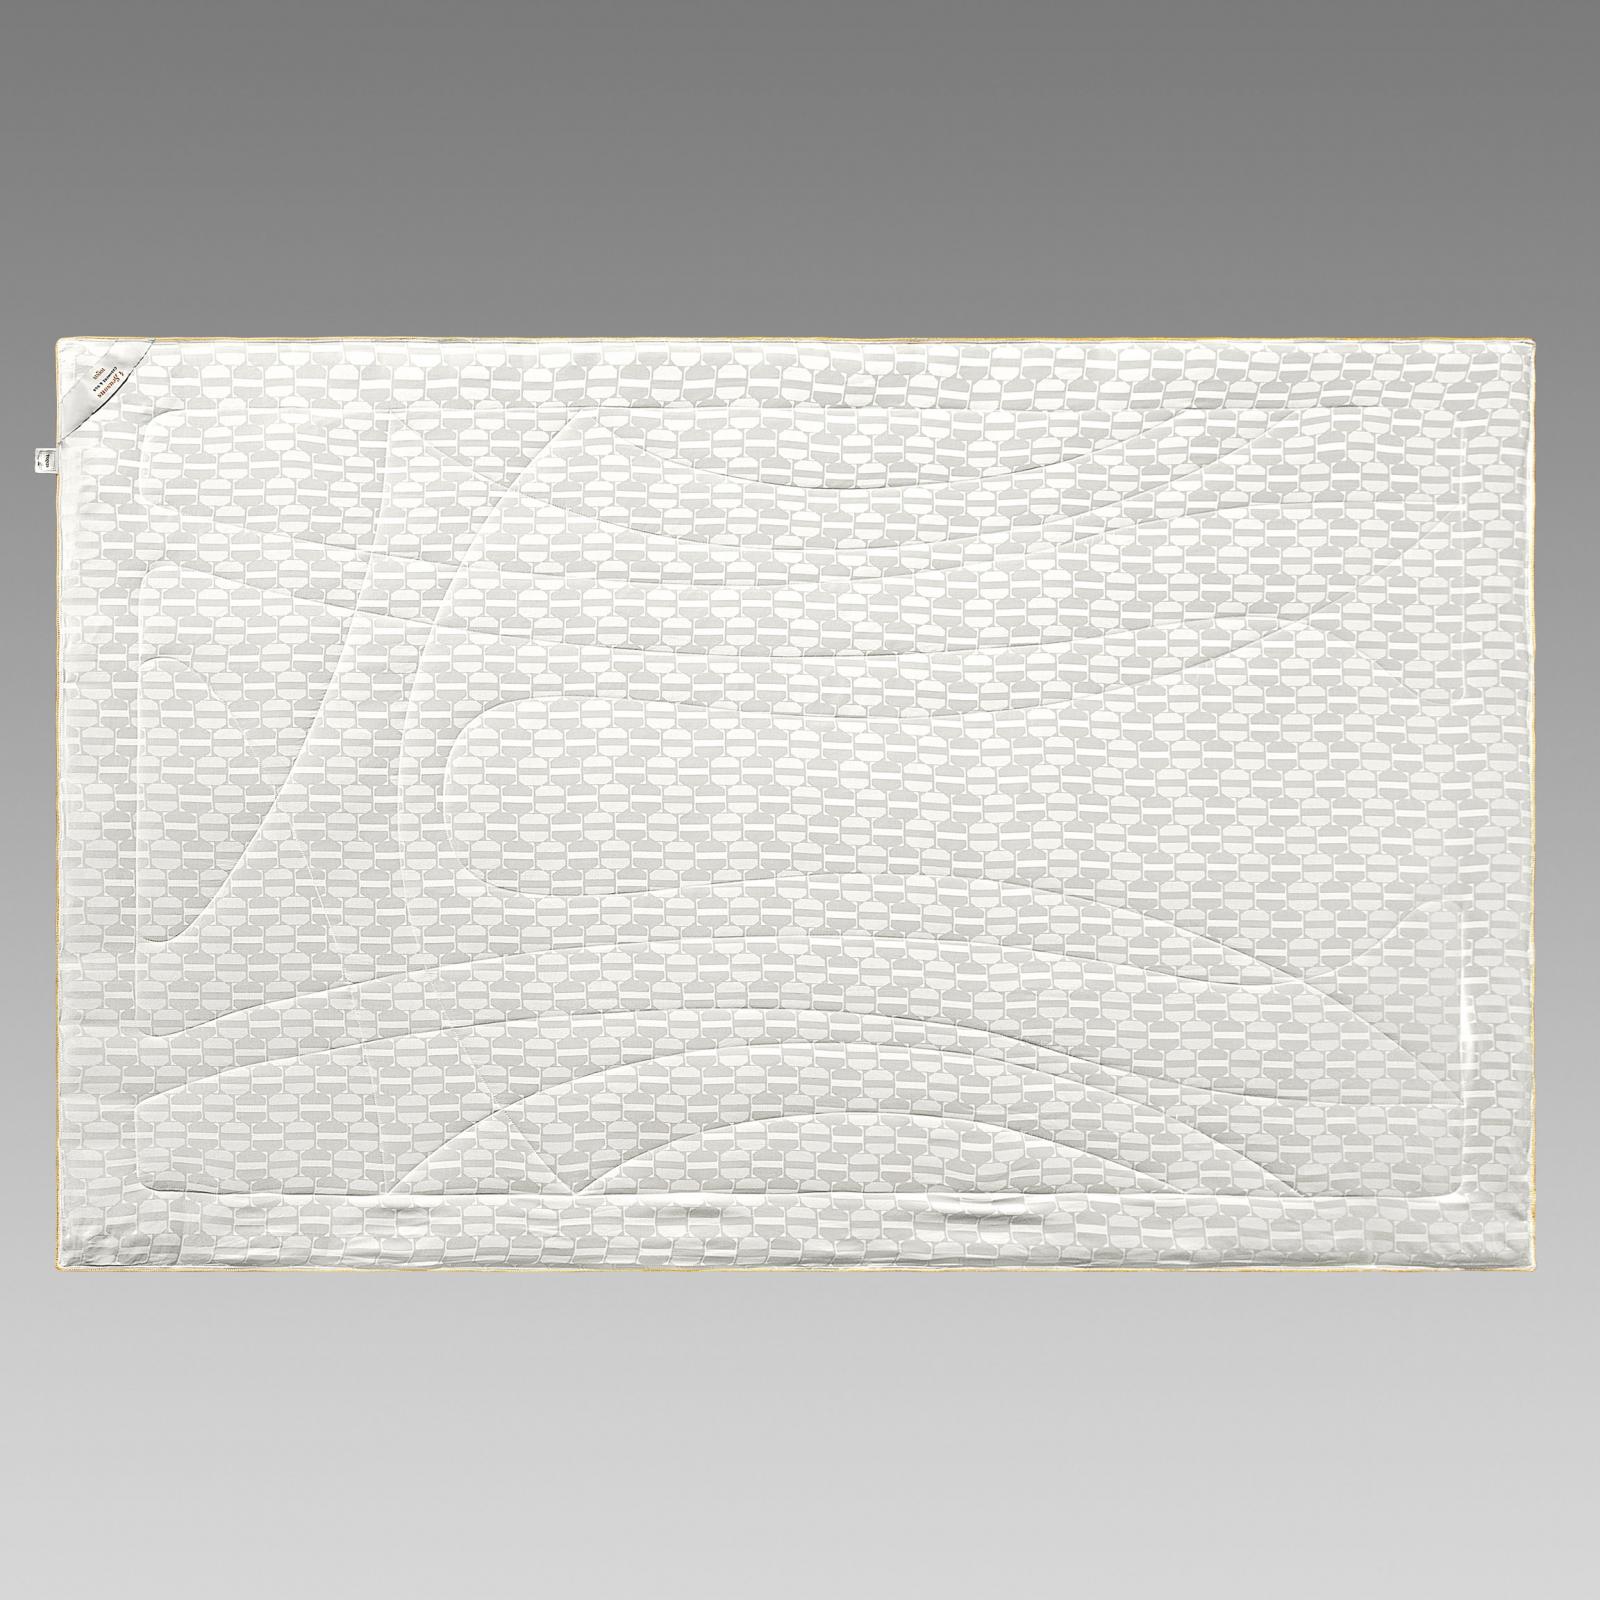 Одеяло 4 сезона Togas (20.04.40.0000), цвет экрю, размер 140х200 см - фото 2